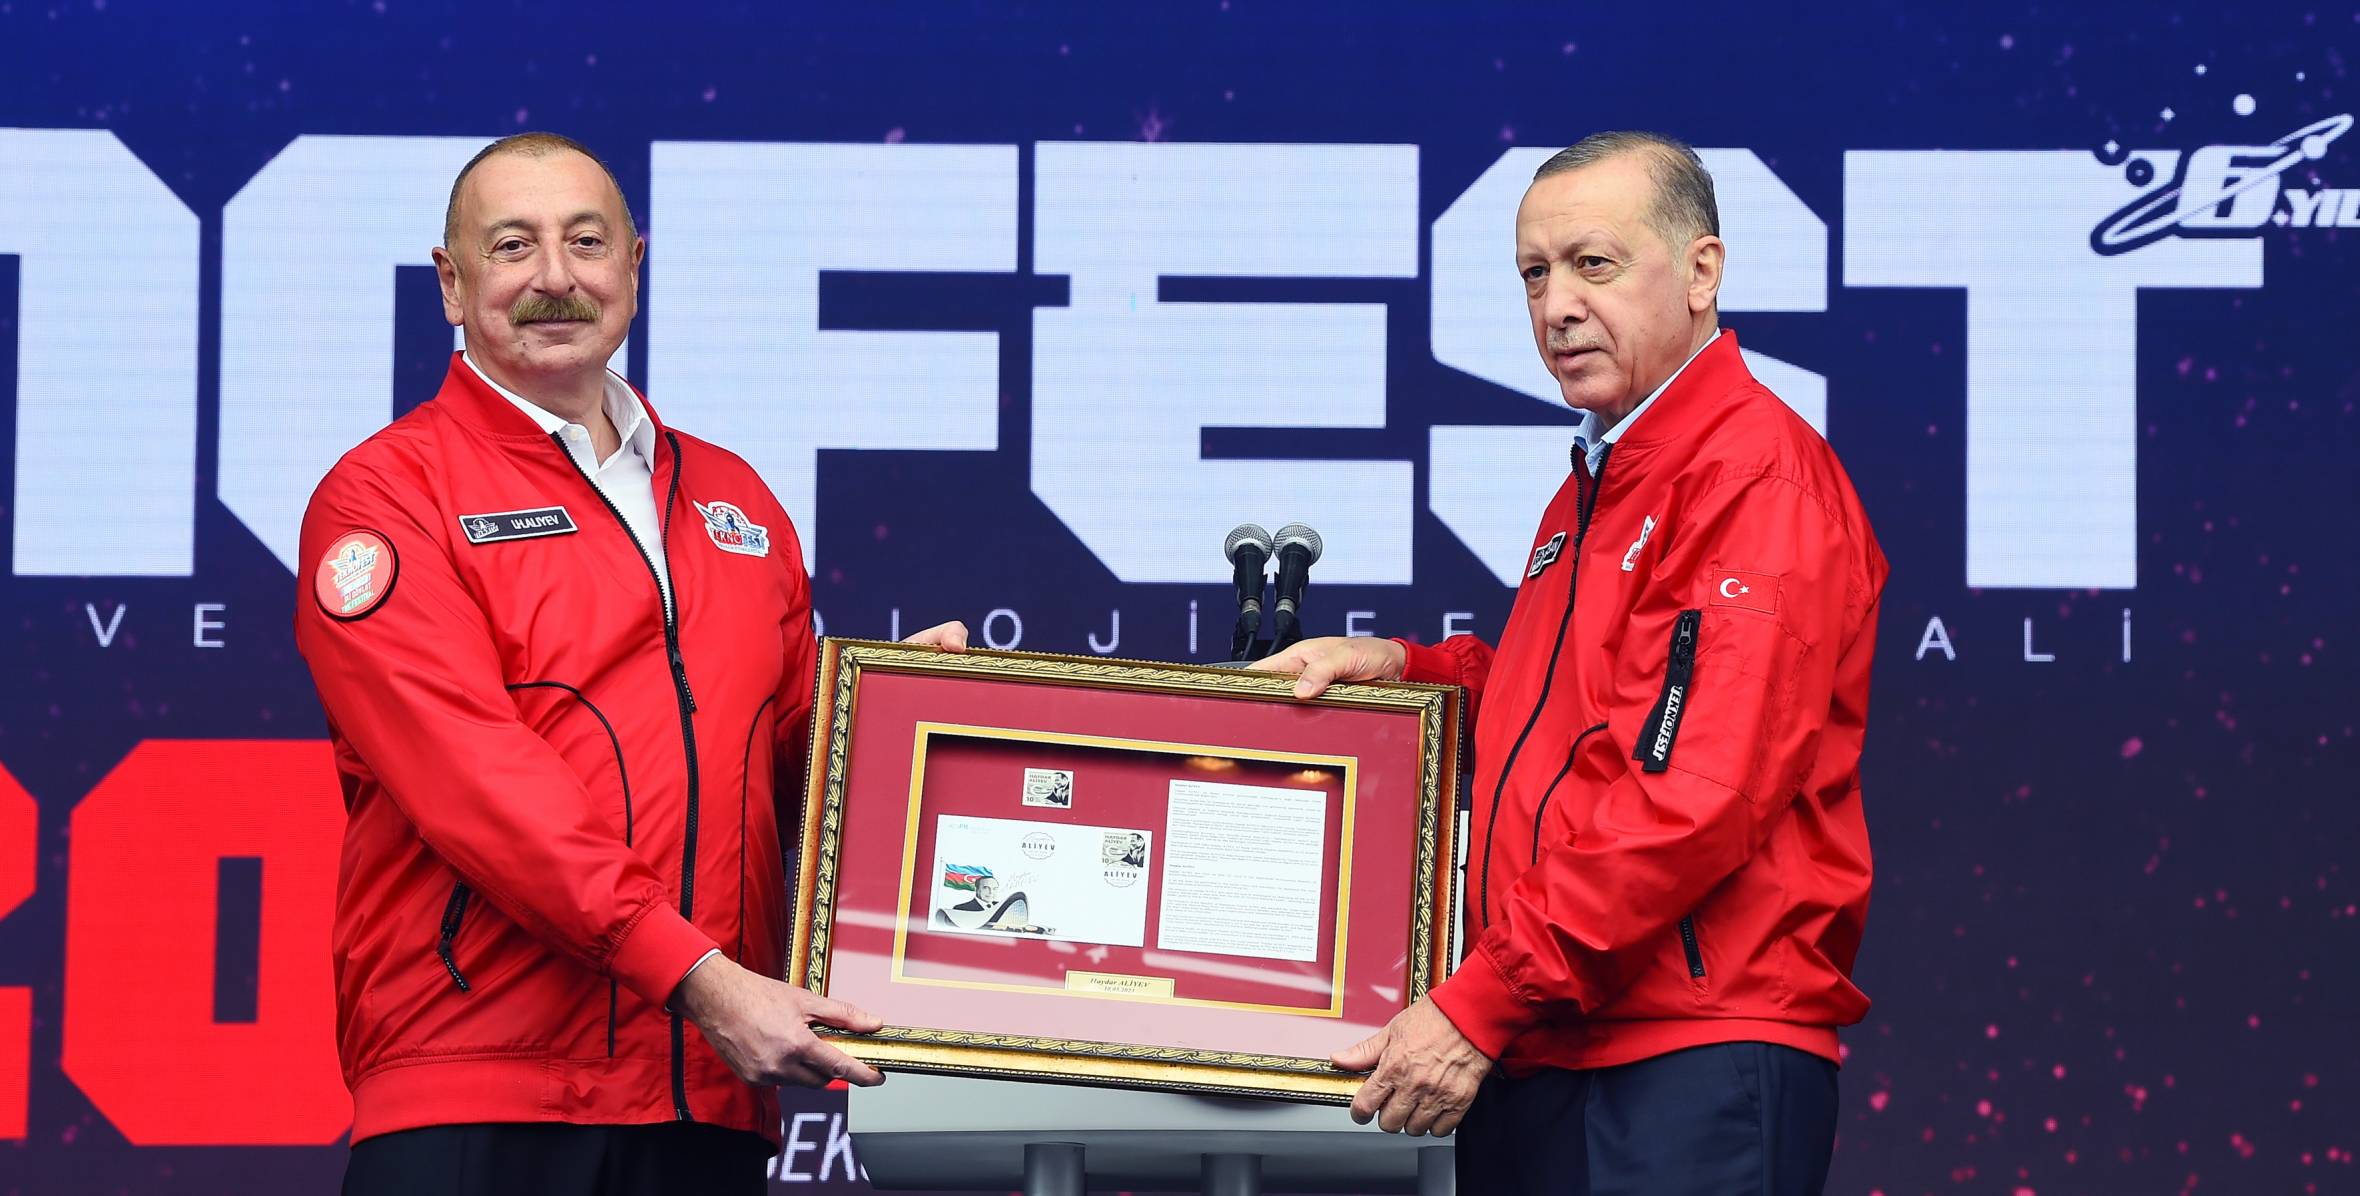 Ilham Aliyev and President Recep Tayyip Erdogan attended TEKNOFEST Festival in Istanbul